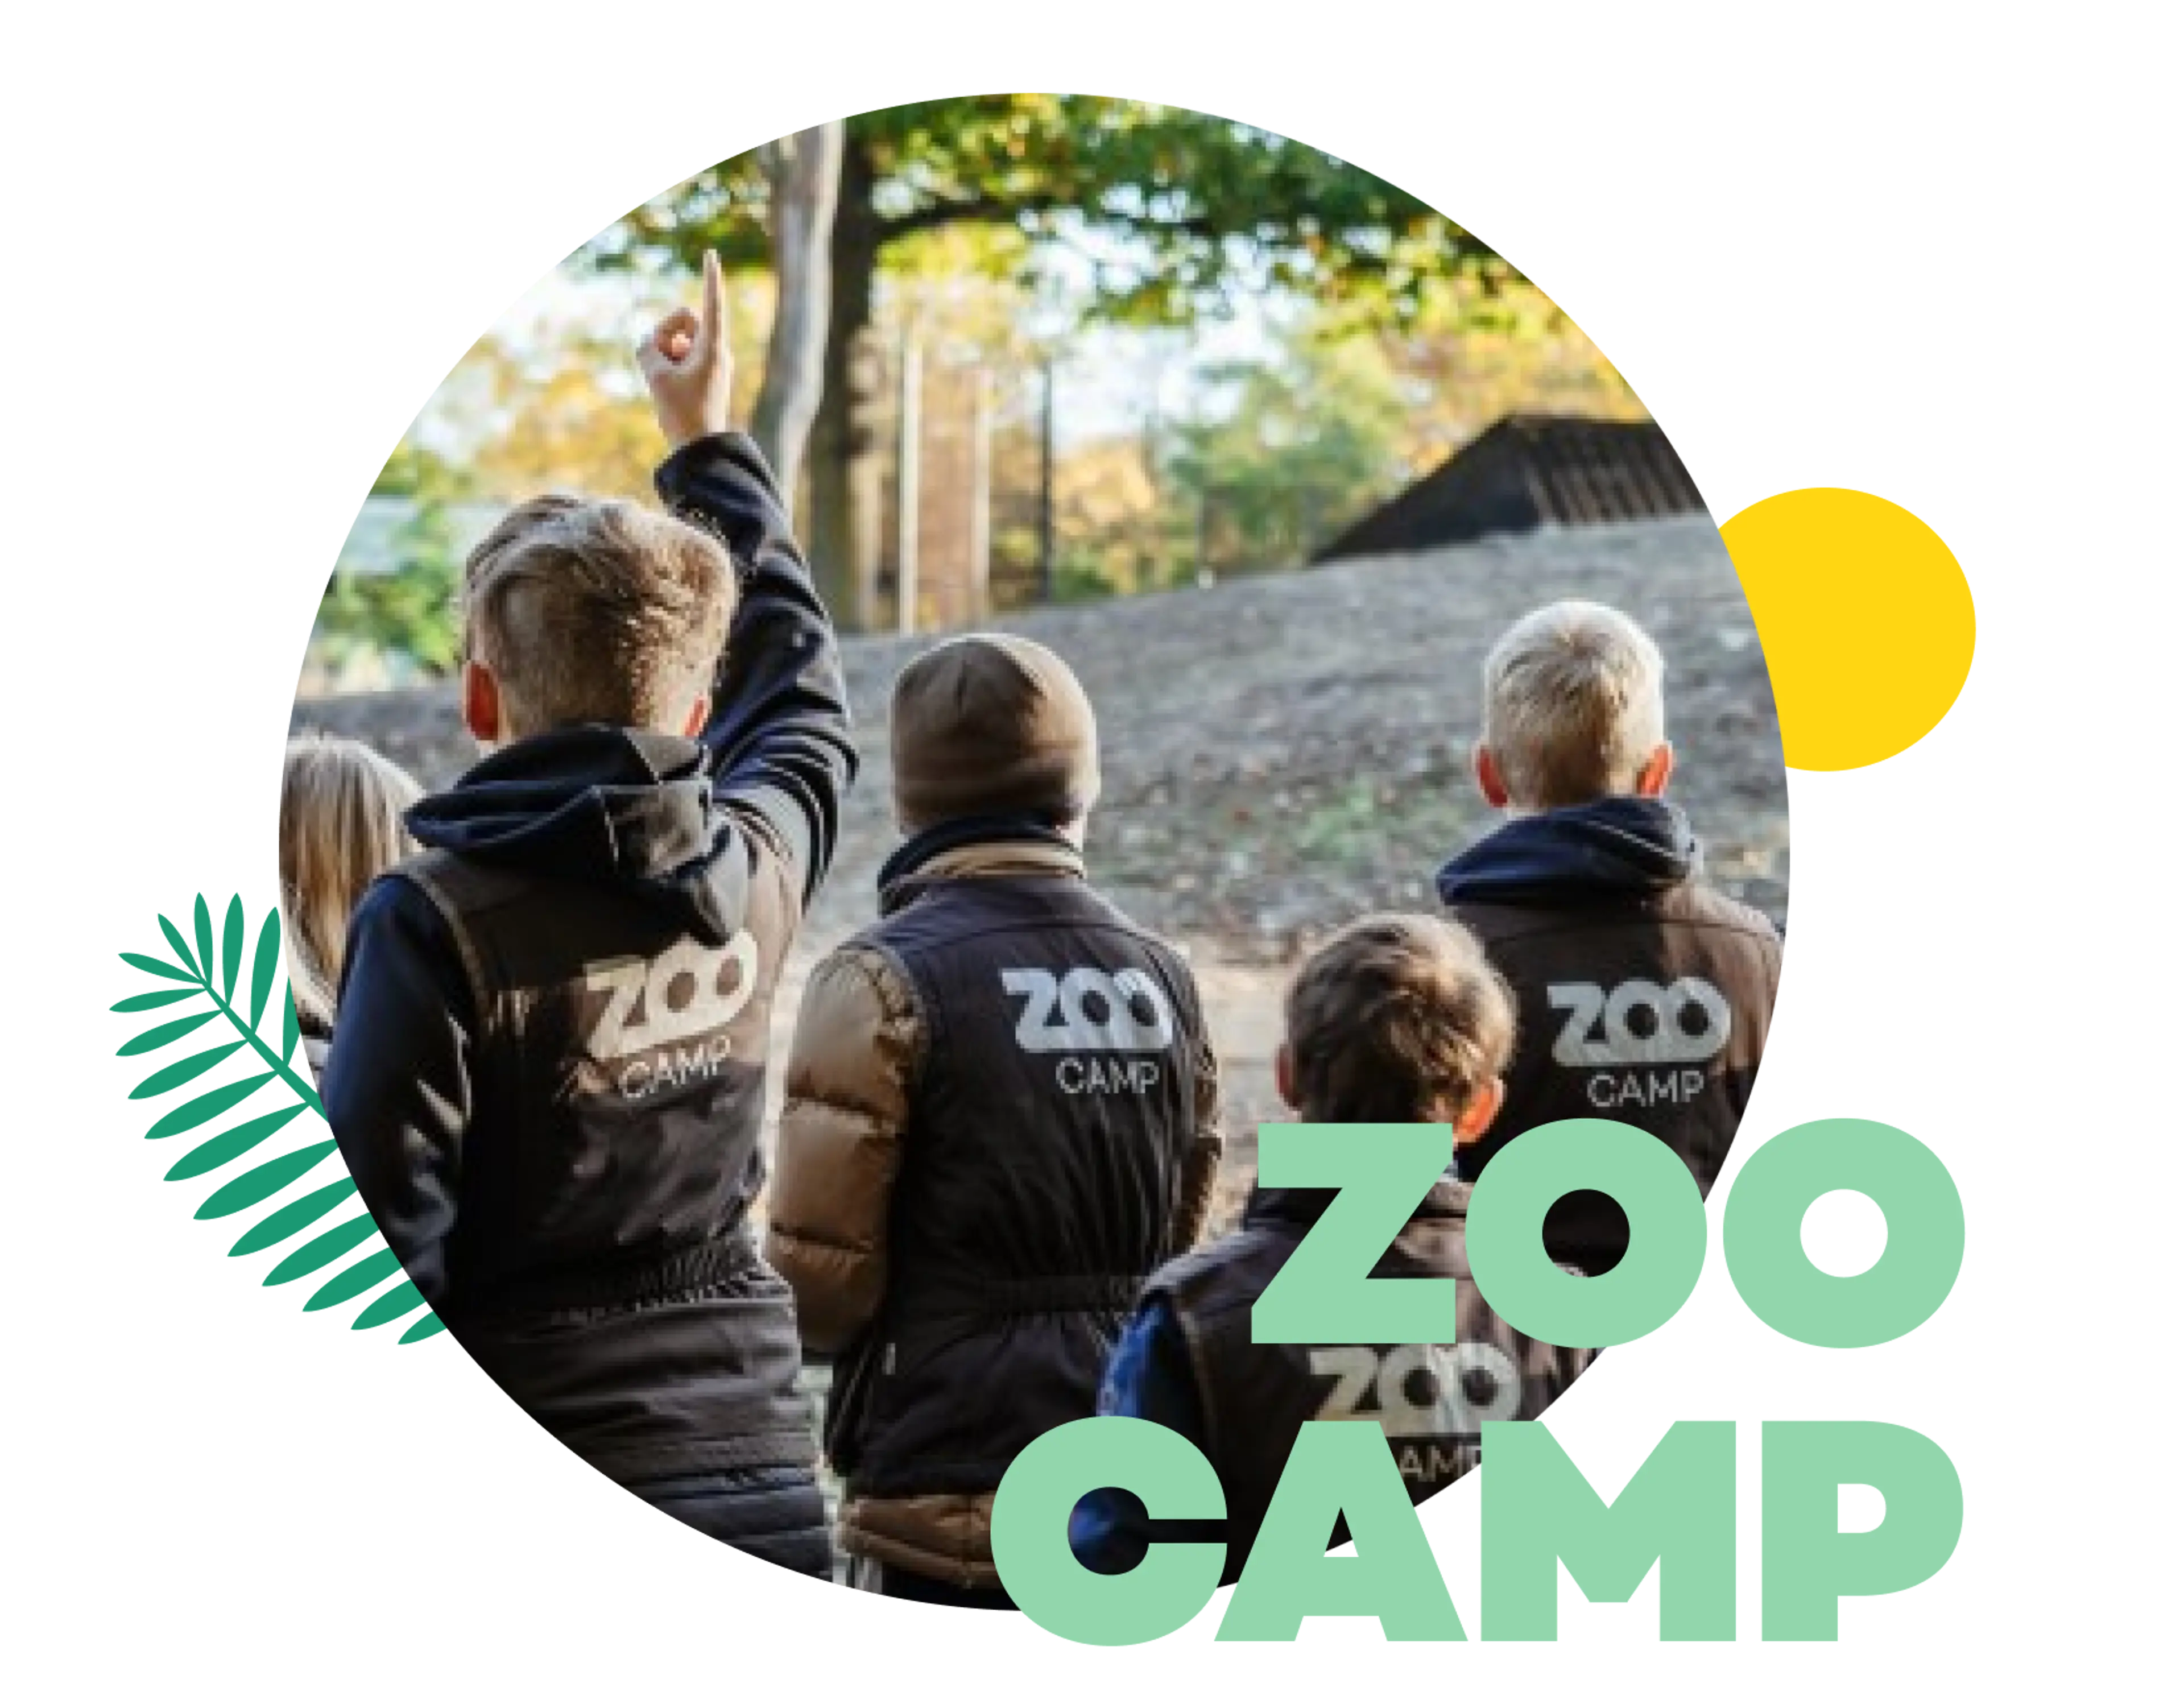 Zoocamp